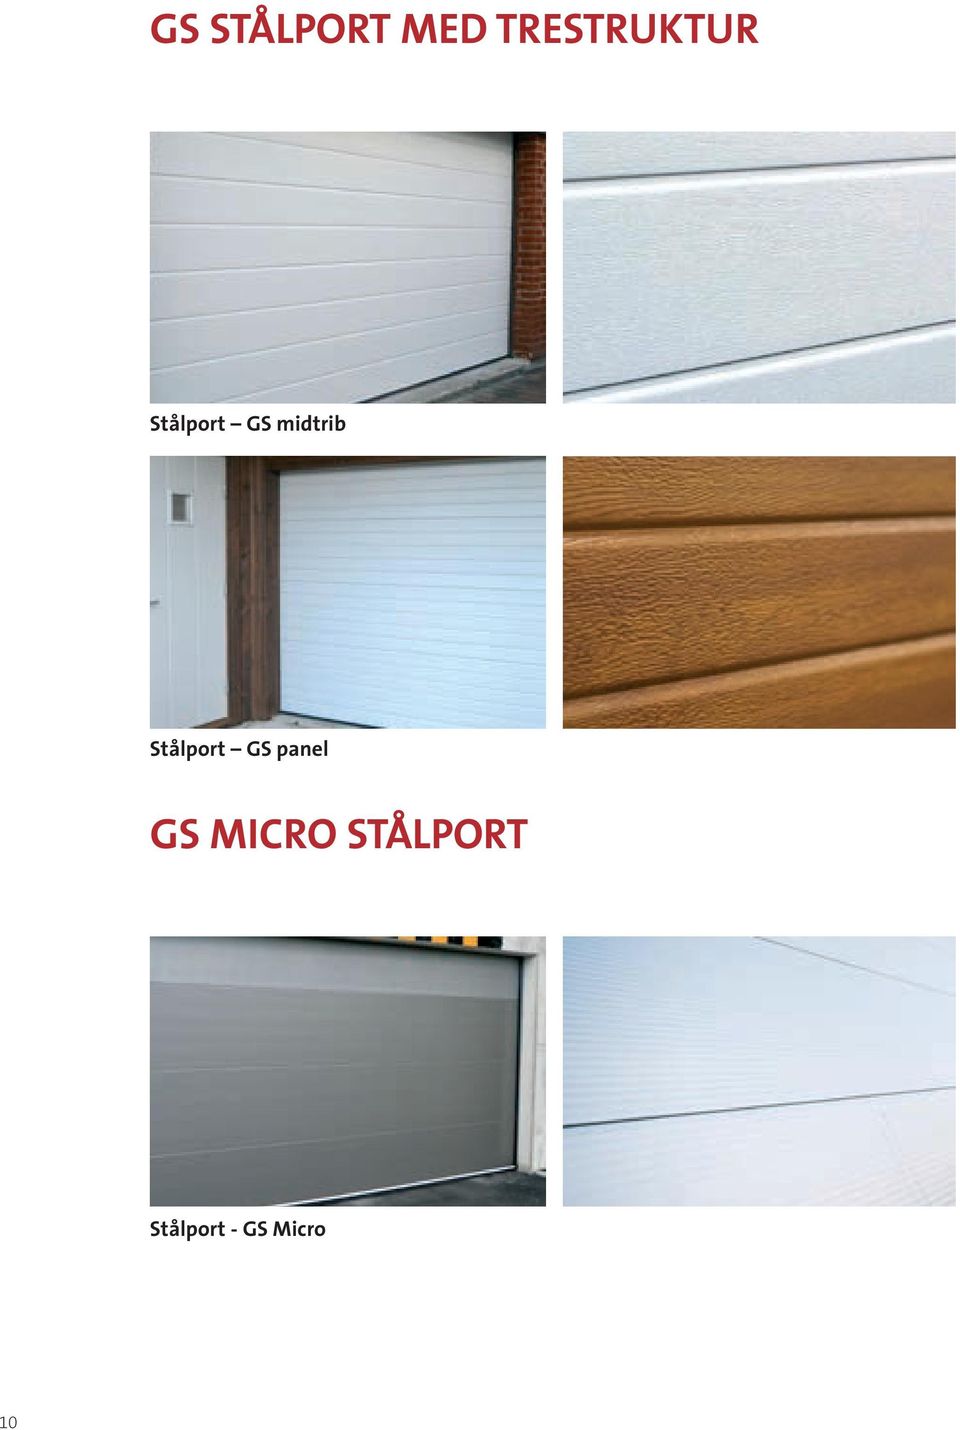 midtrib Stålport GS panel